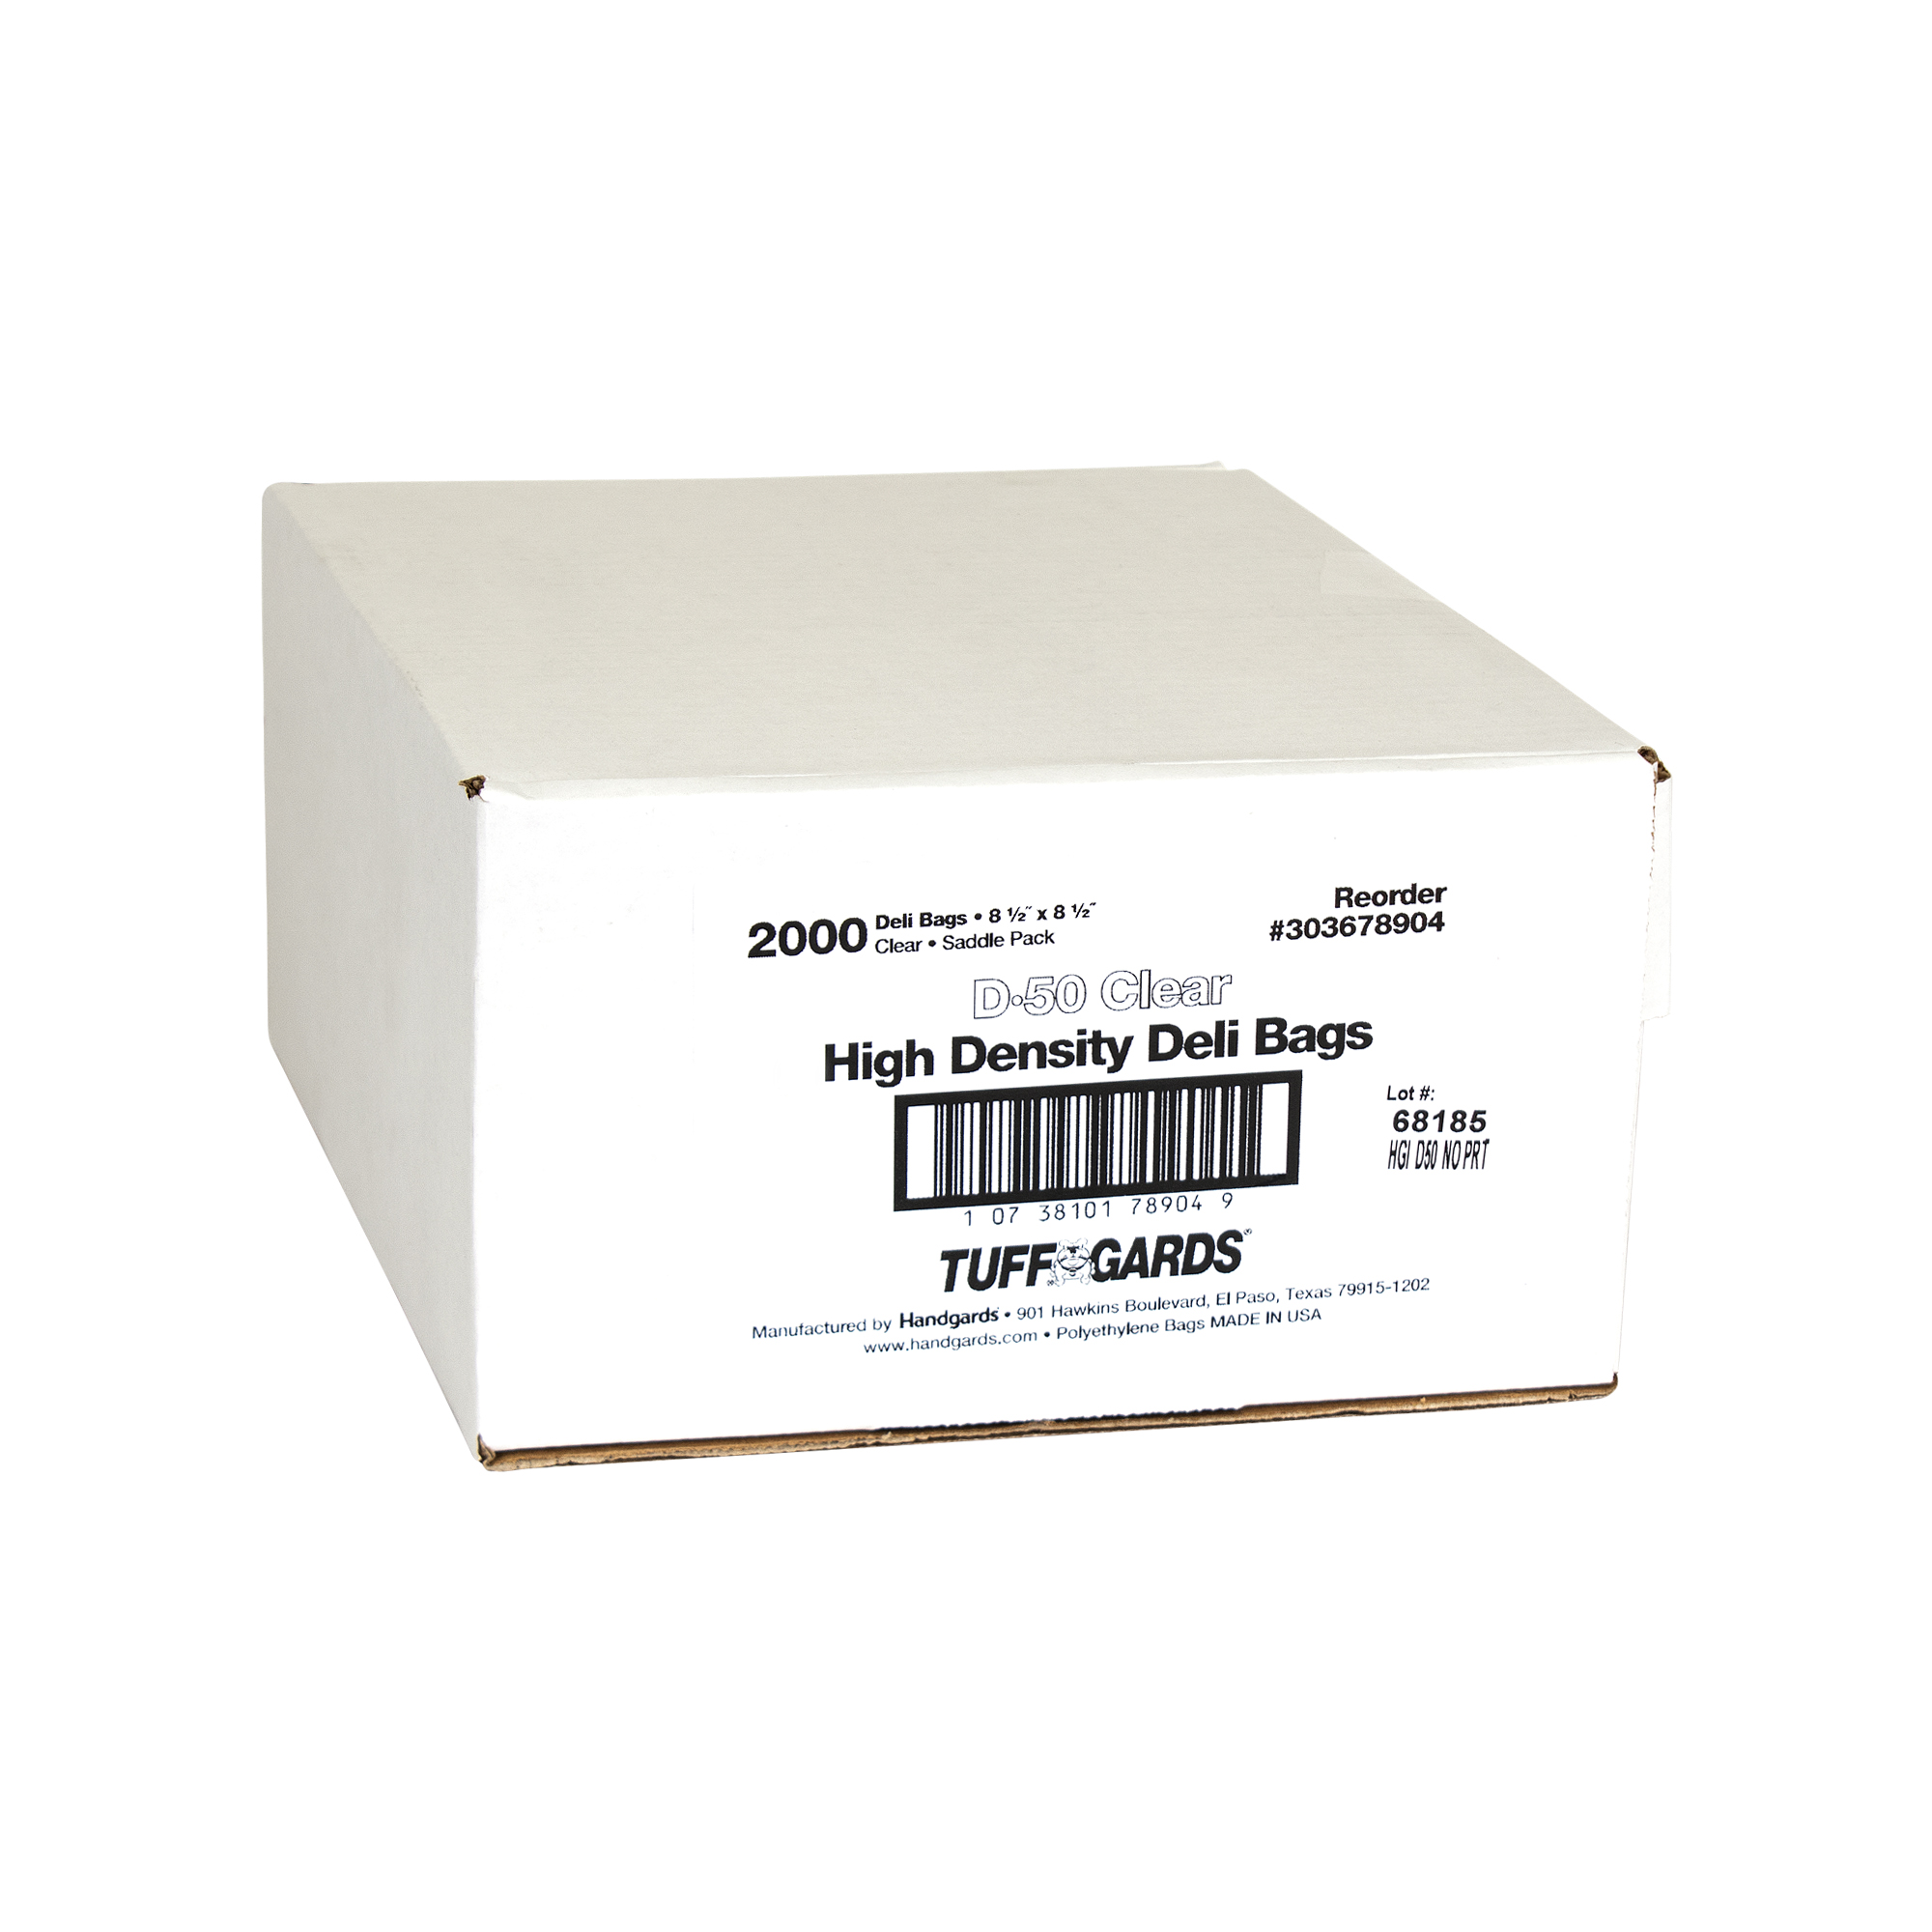 Tuffgards® Low Density Disposable Food Storage Bags – LD6315- 6″ x 3″ x 15″  – Handgards®